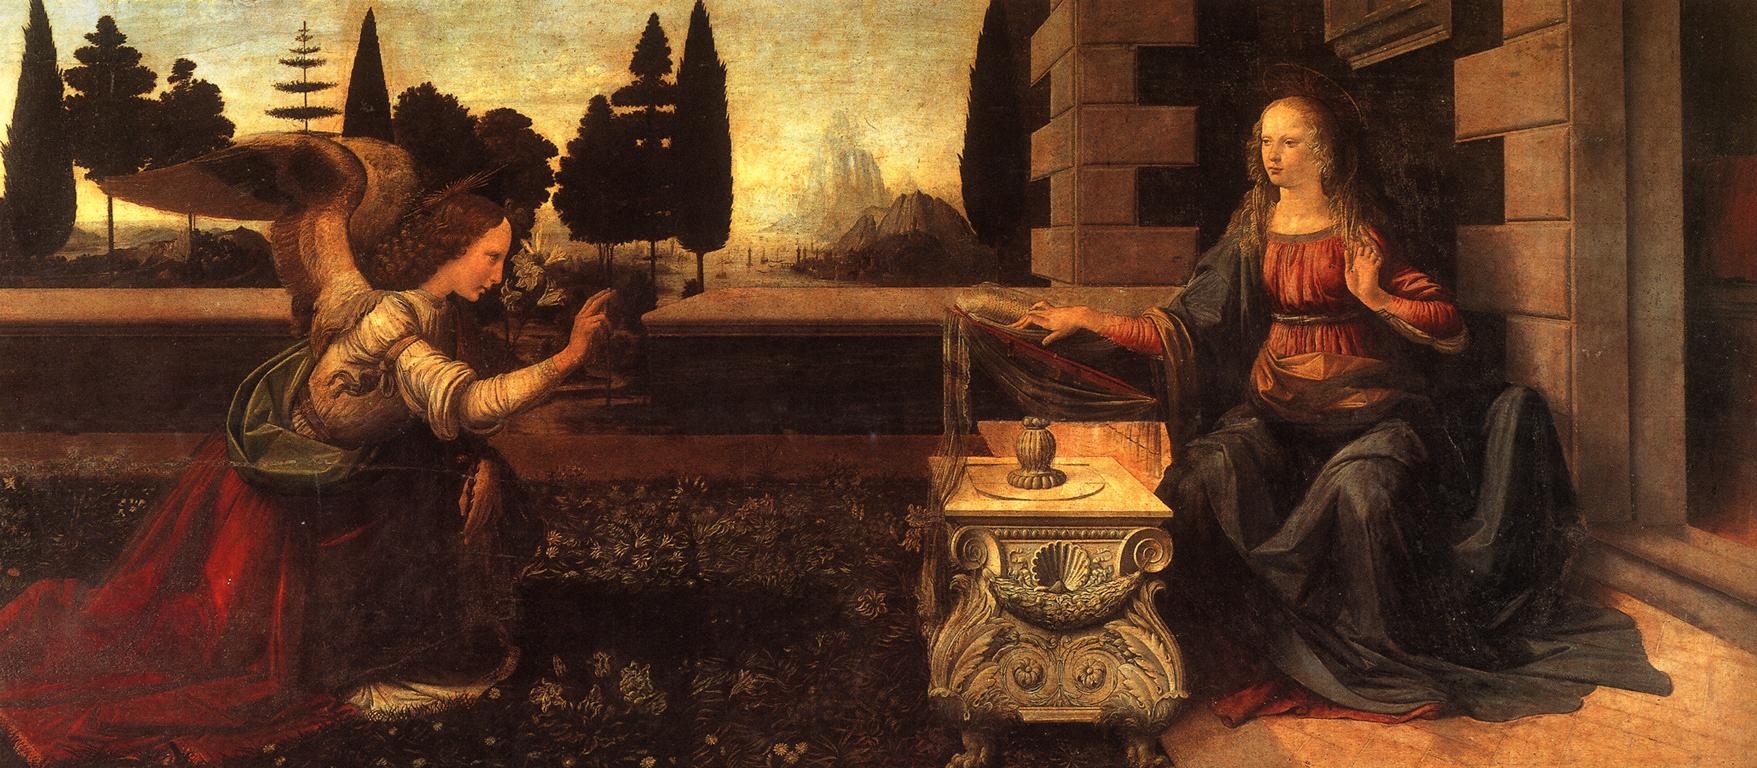 Annunciazione by Leonardo da Vinci - c. 1472 - 217 x 98 cm 